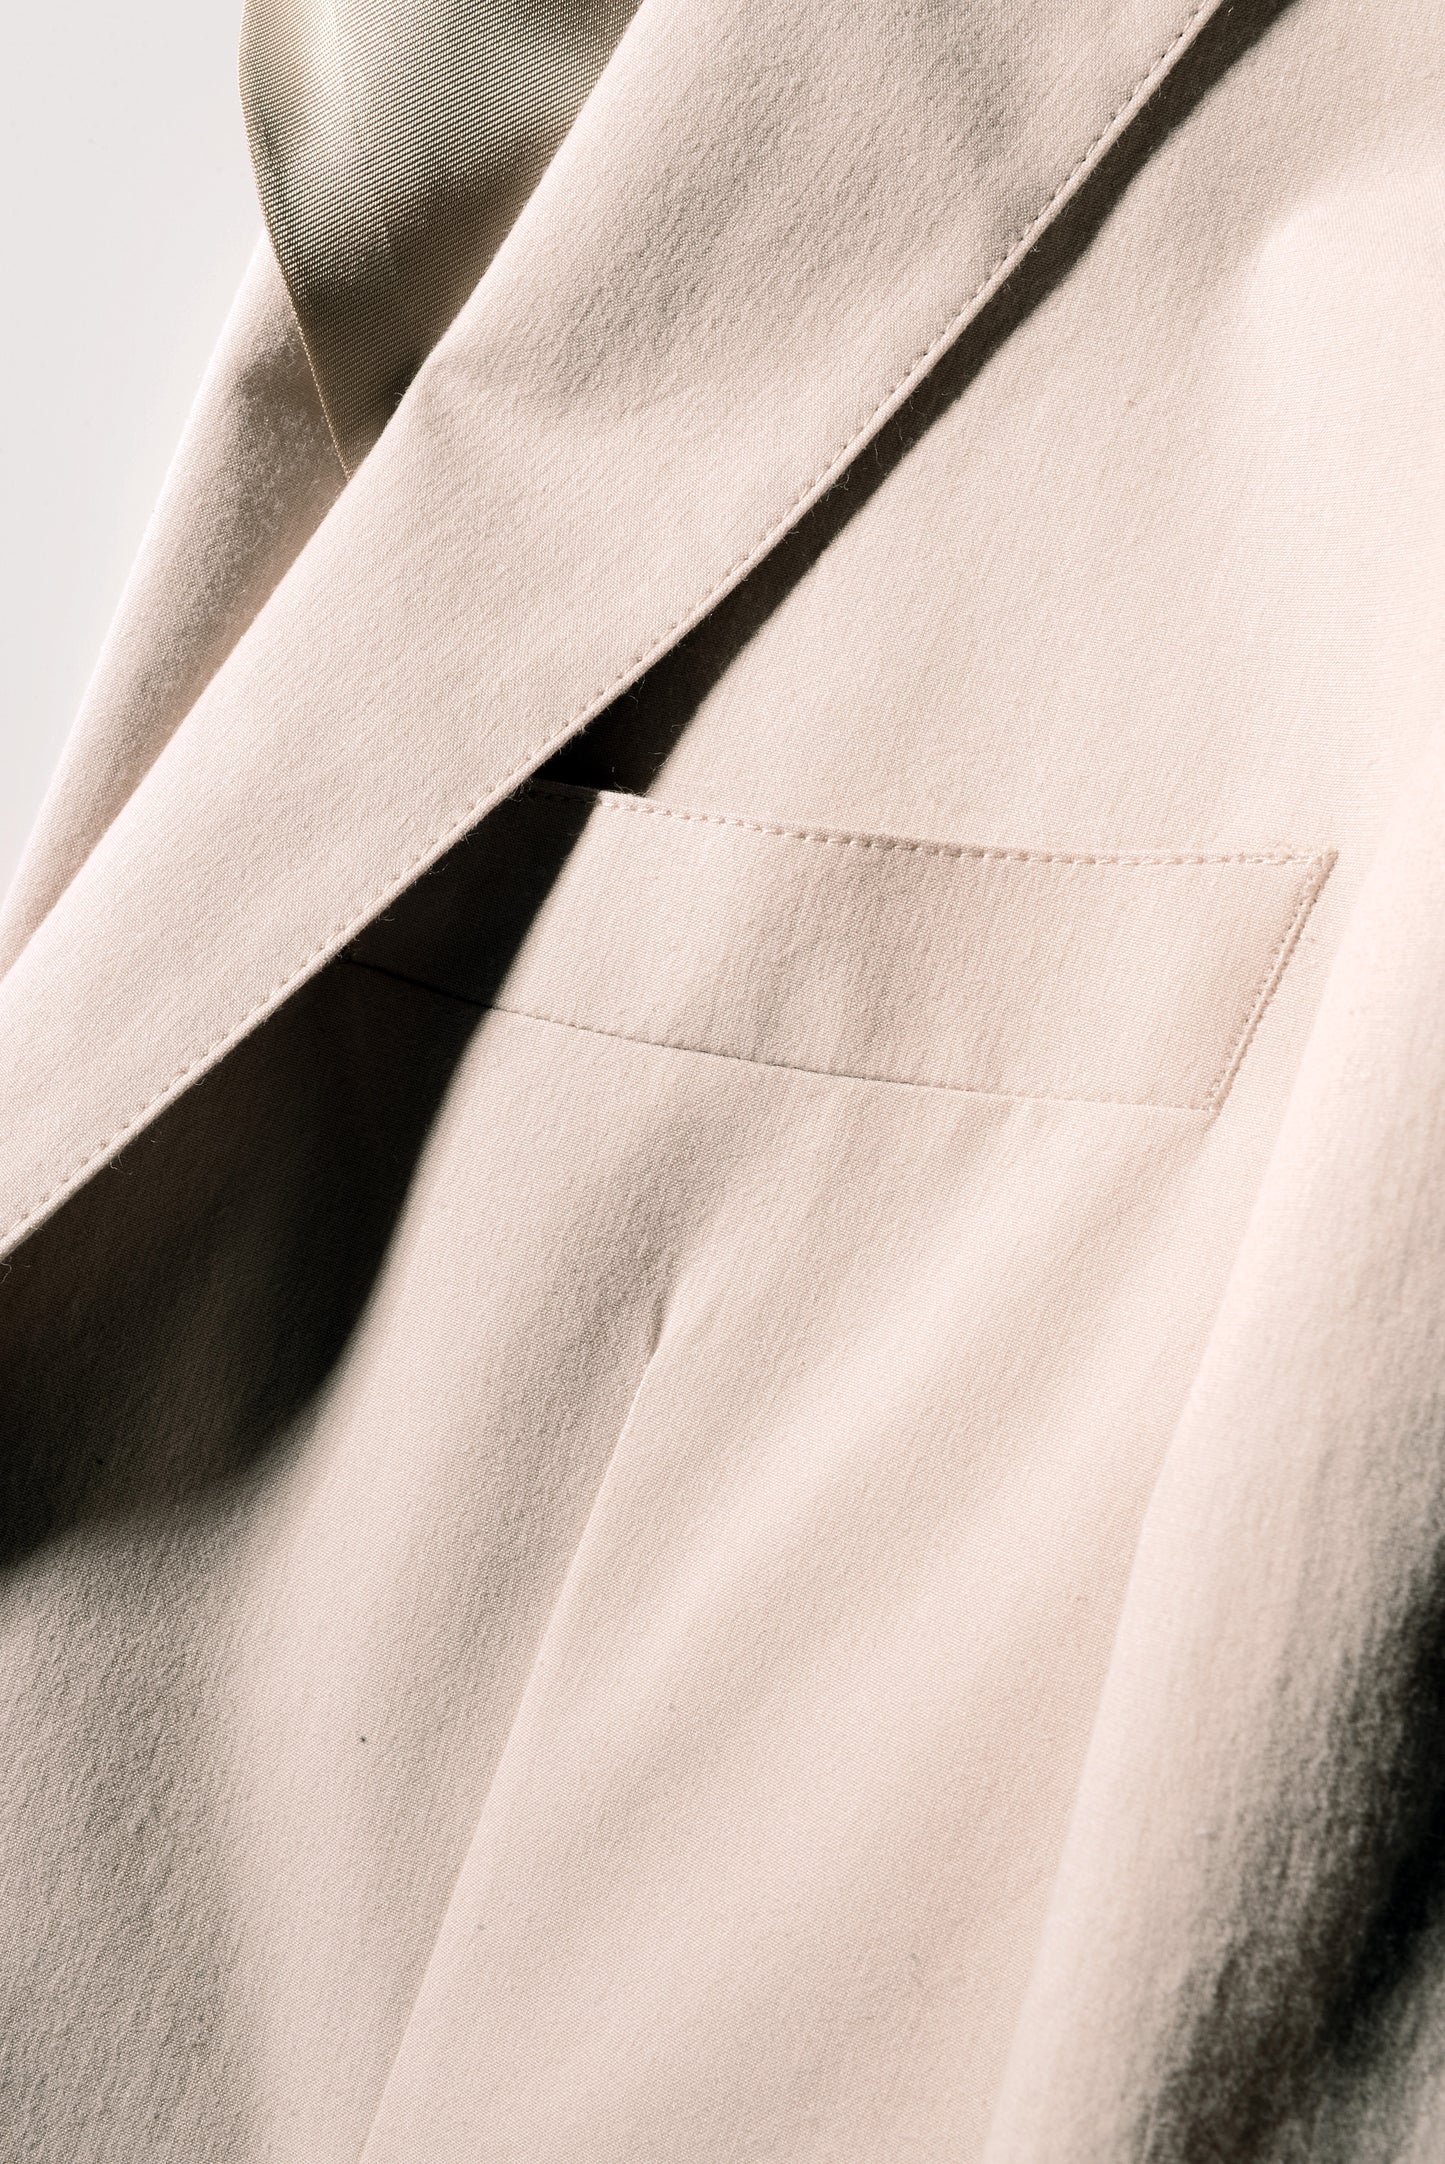 Detail shot of chest pocket and lapel on Brooklyn Tailors BKT35 Unstructured Jacket in Crisp Cotton Blend - Desert Sand